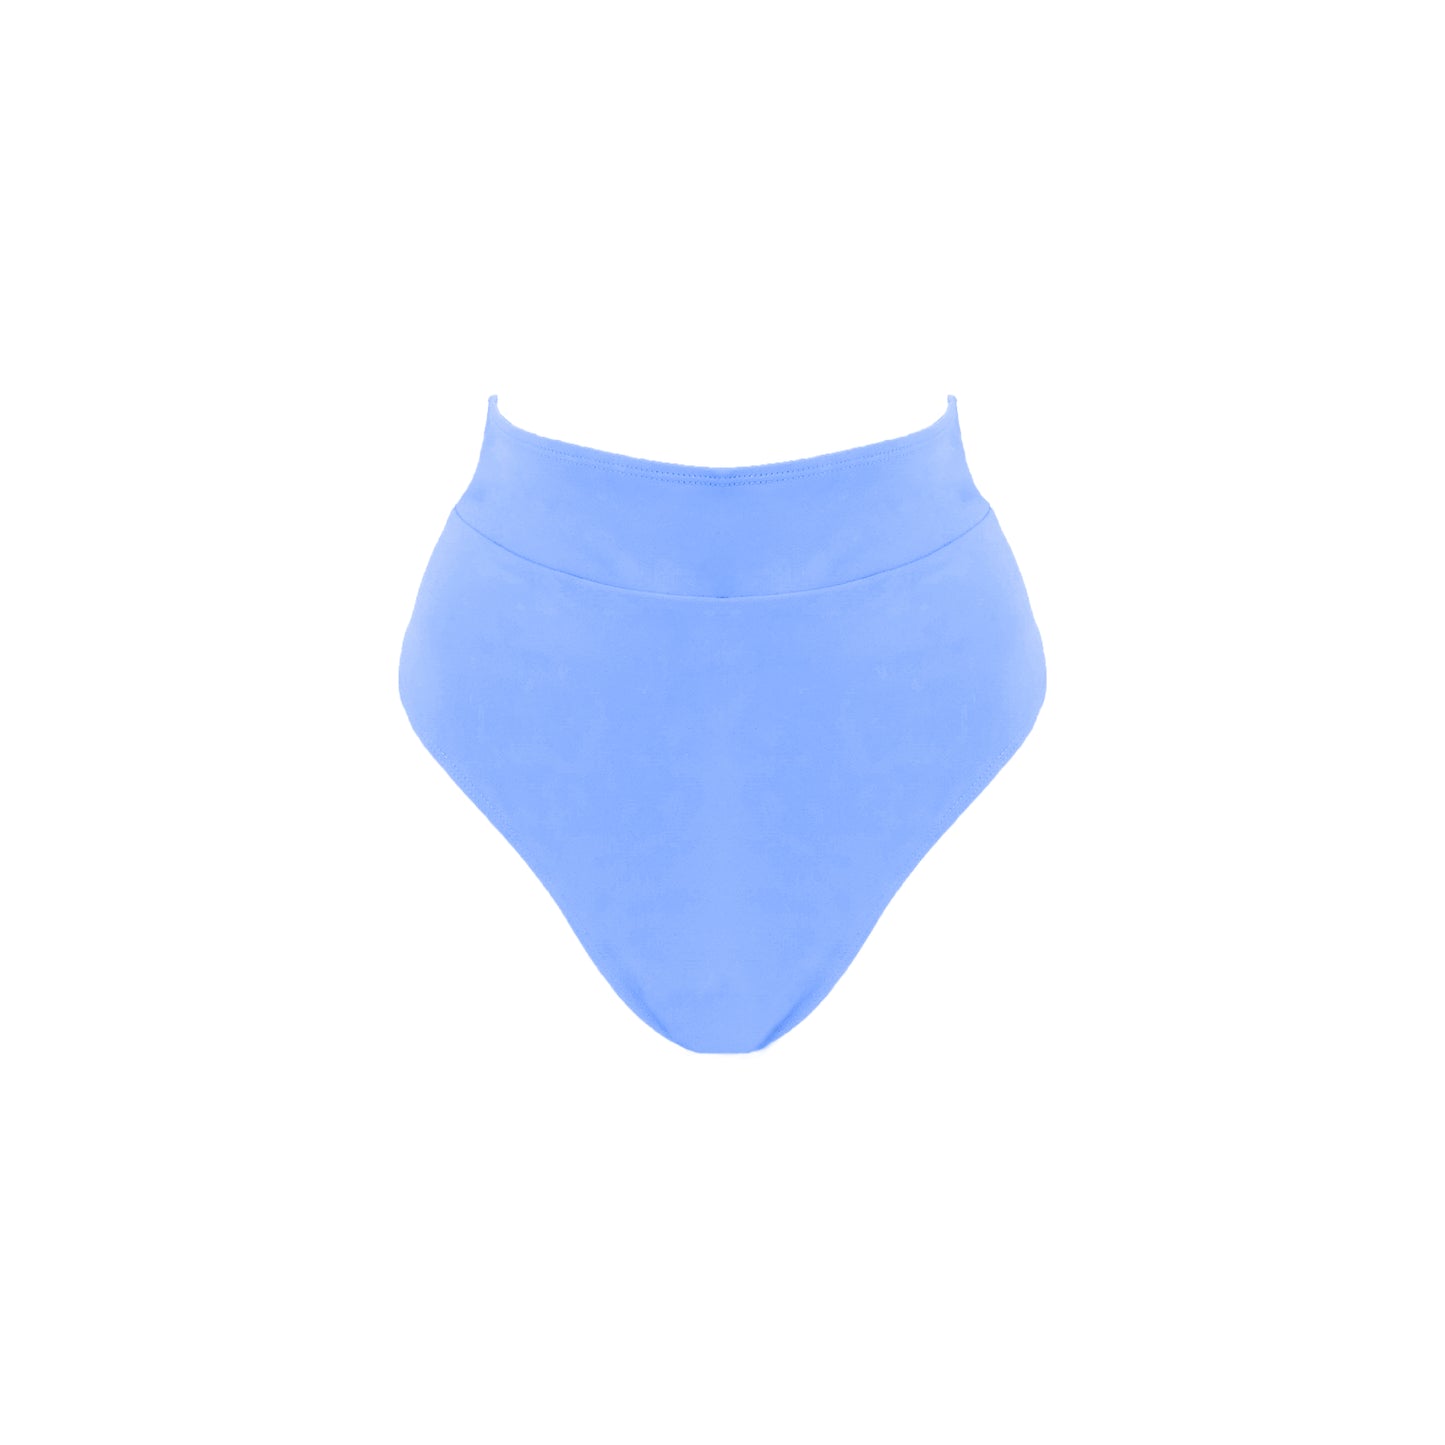 Periwinkle blue ultra high waist bikini bottom with banded waist, high cut legs and full bum coverage.